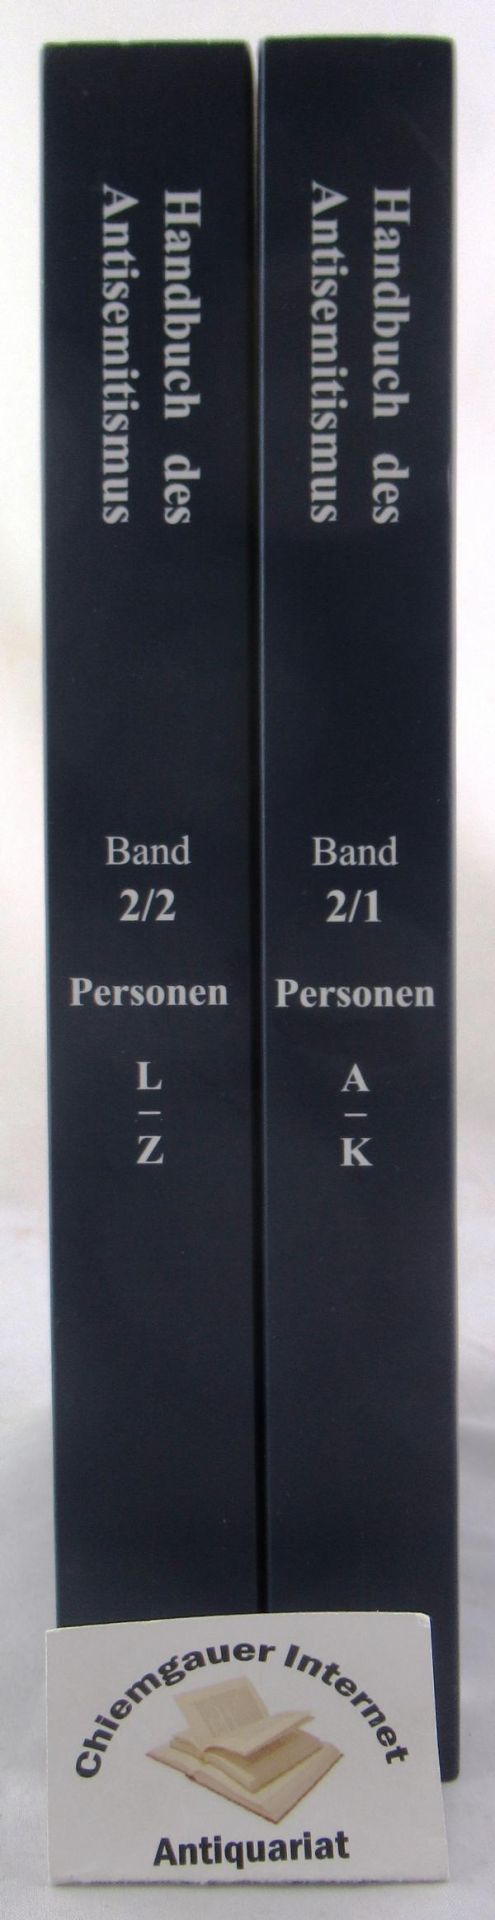 Handbuch des Antisemitismus.  Band 2 /1 Personen A - K. - Band 2/2 Personen L - Z. ZWEI Bände. - Benz, Wolfgang (Hrsg).